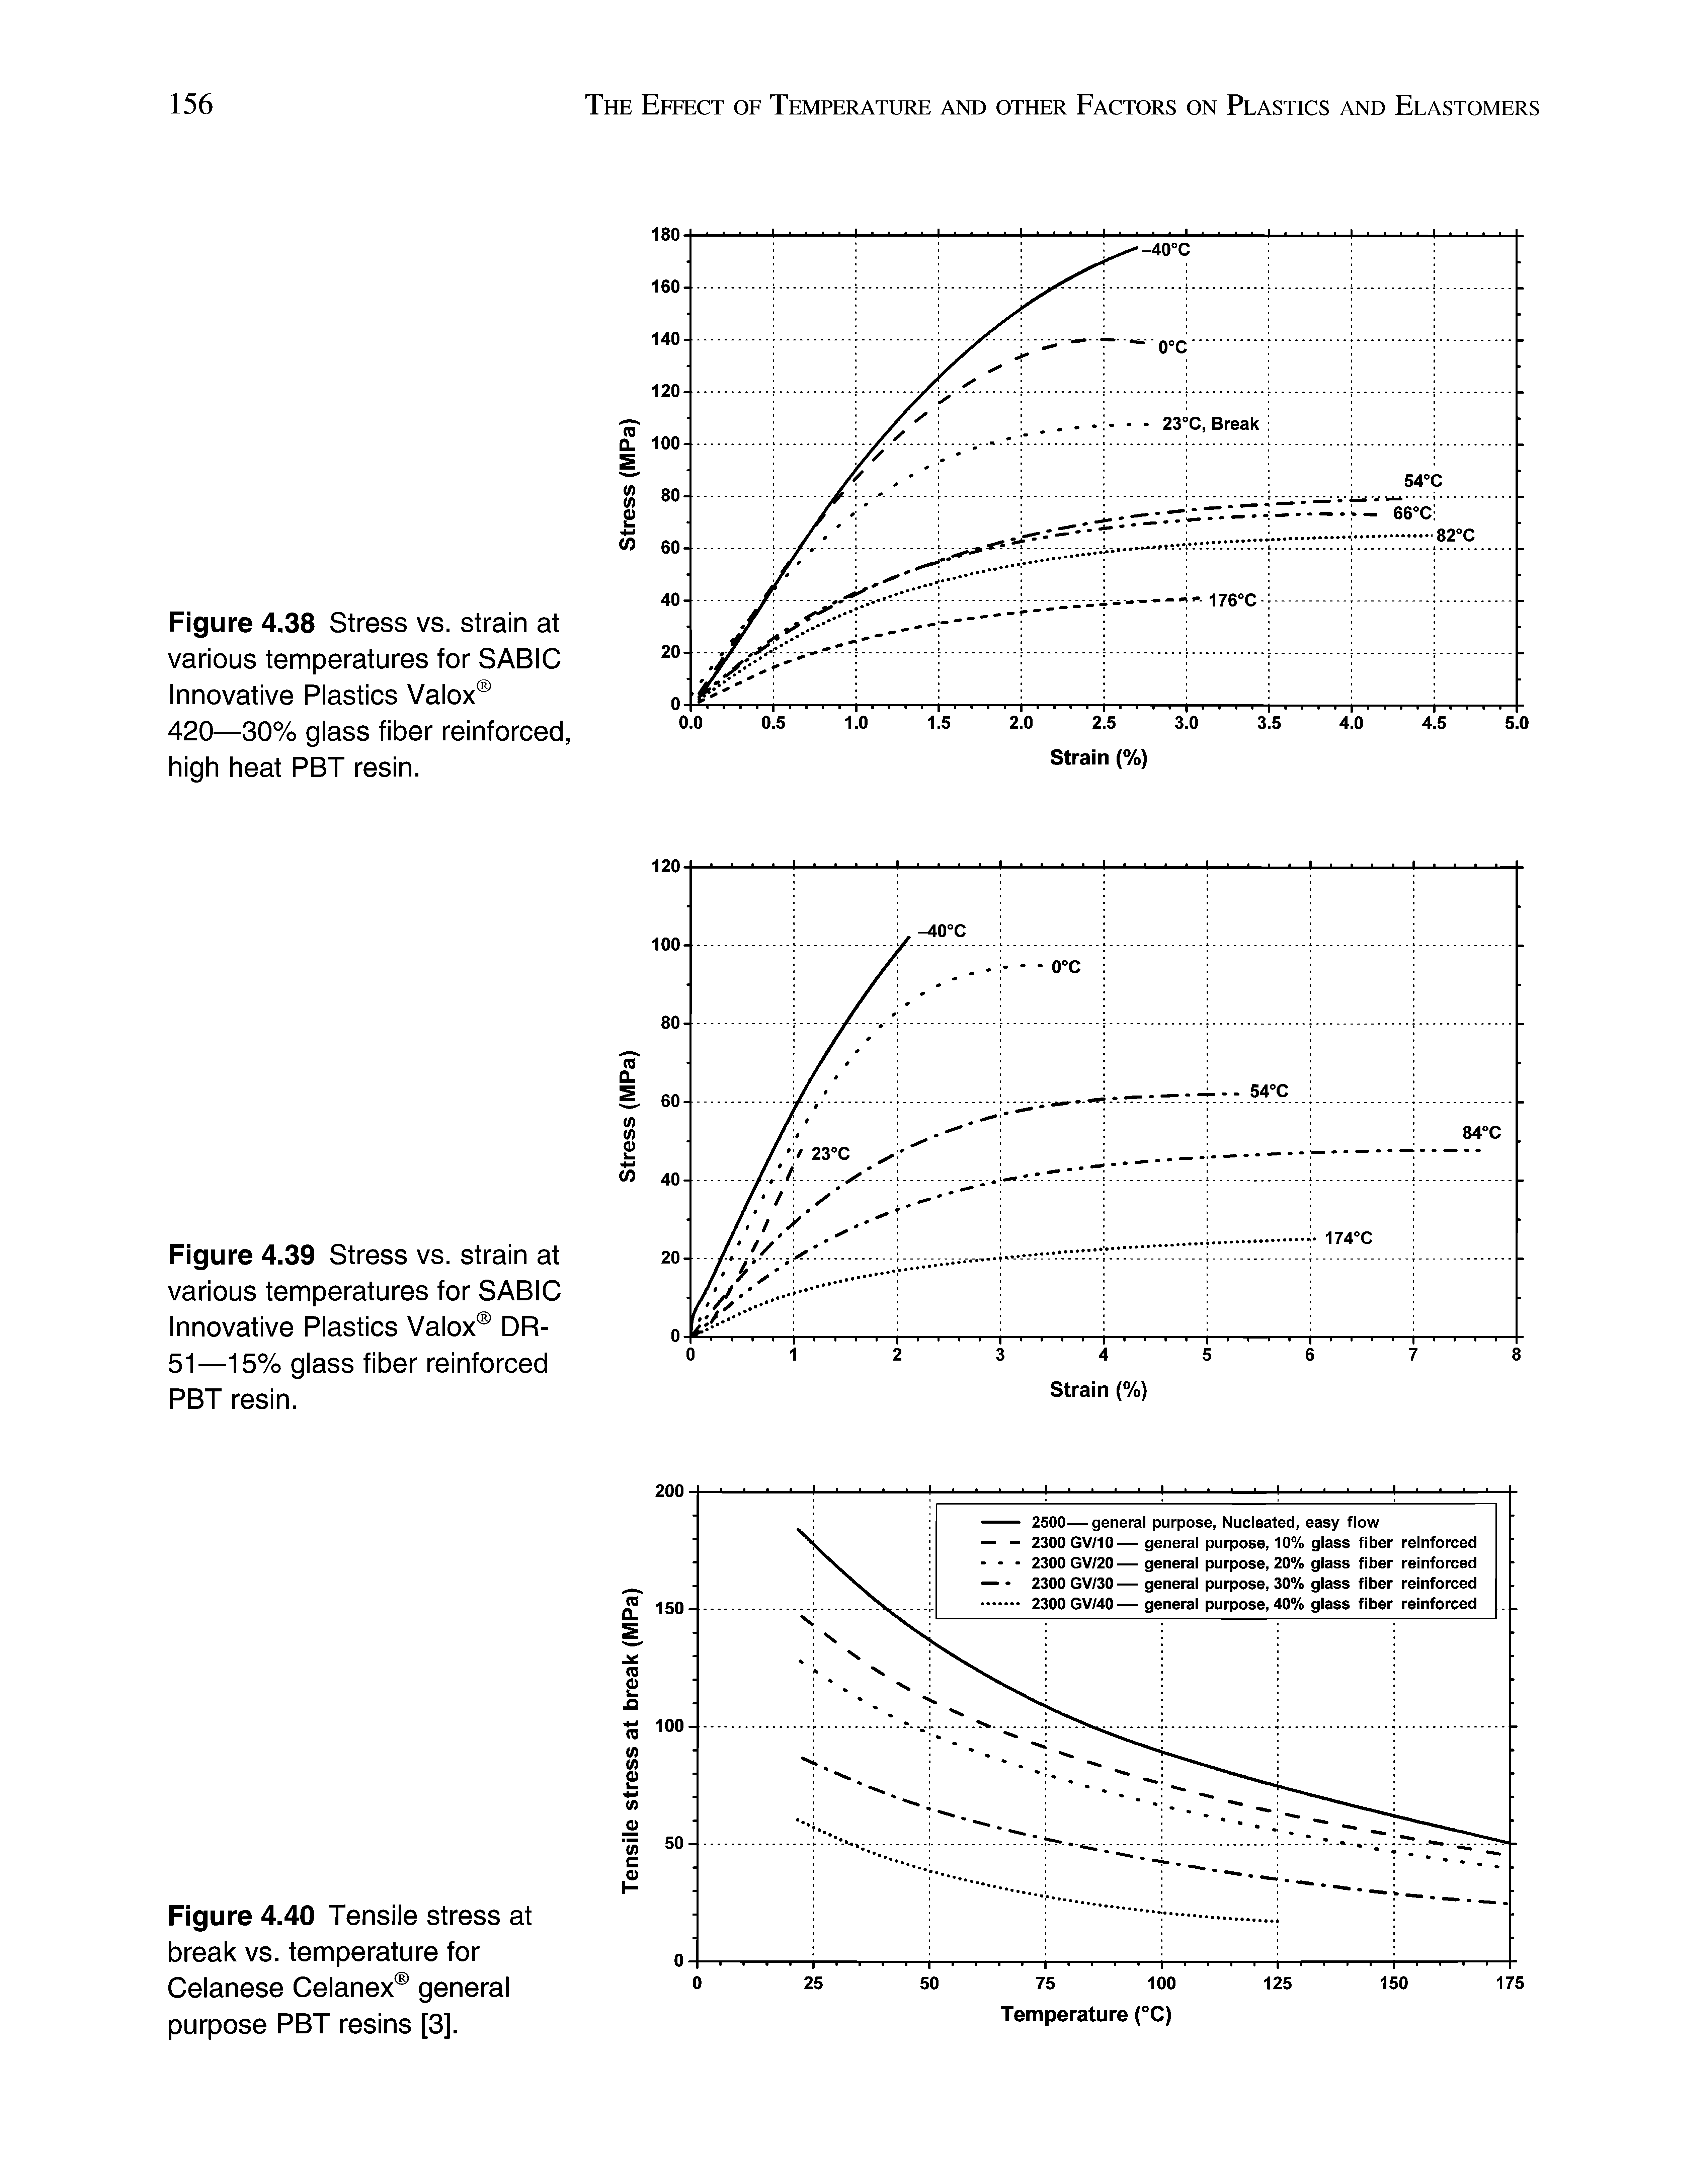 Figure 4.40 Tensile stress at break vs. temperature for Celanese Celanex general purpose PBT resins [3].